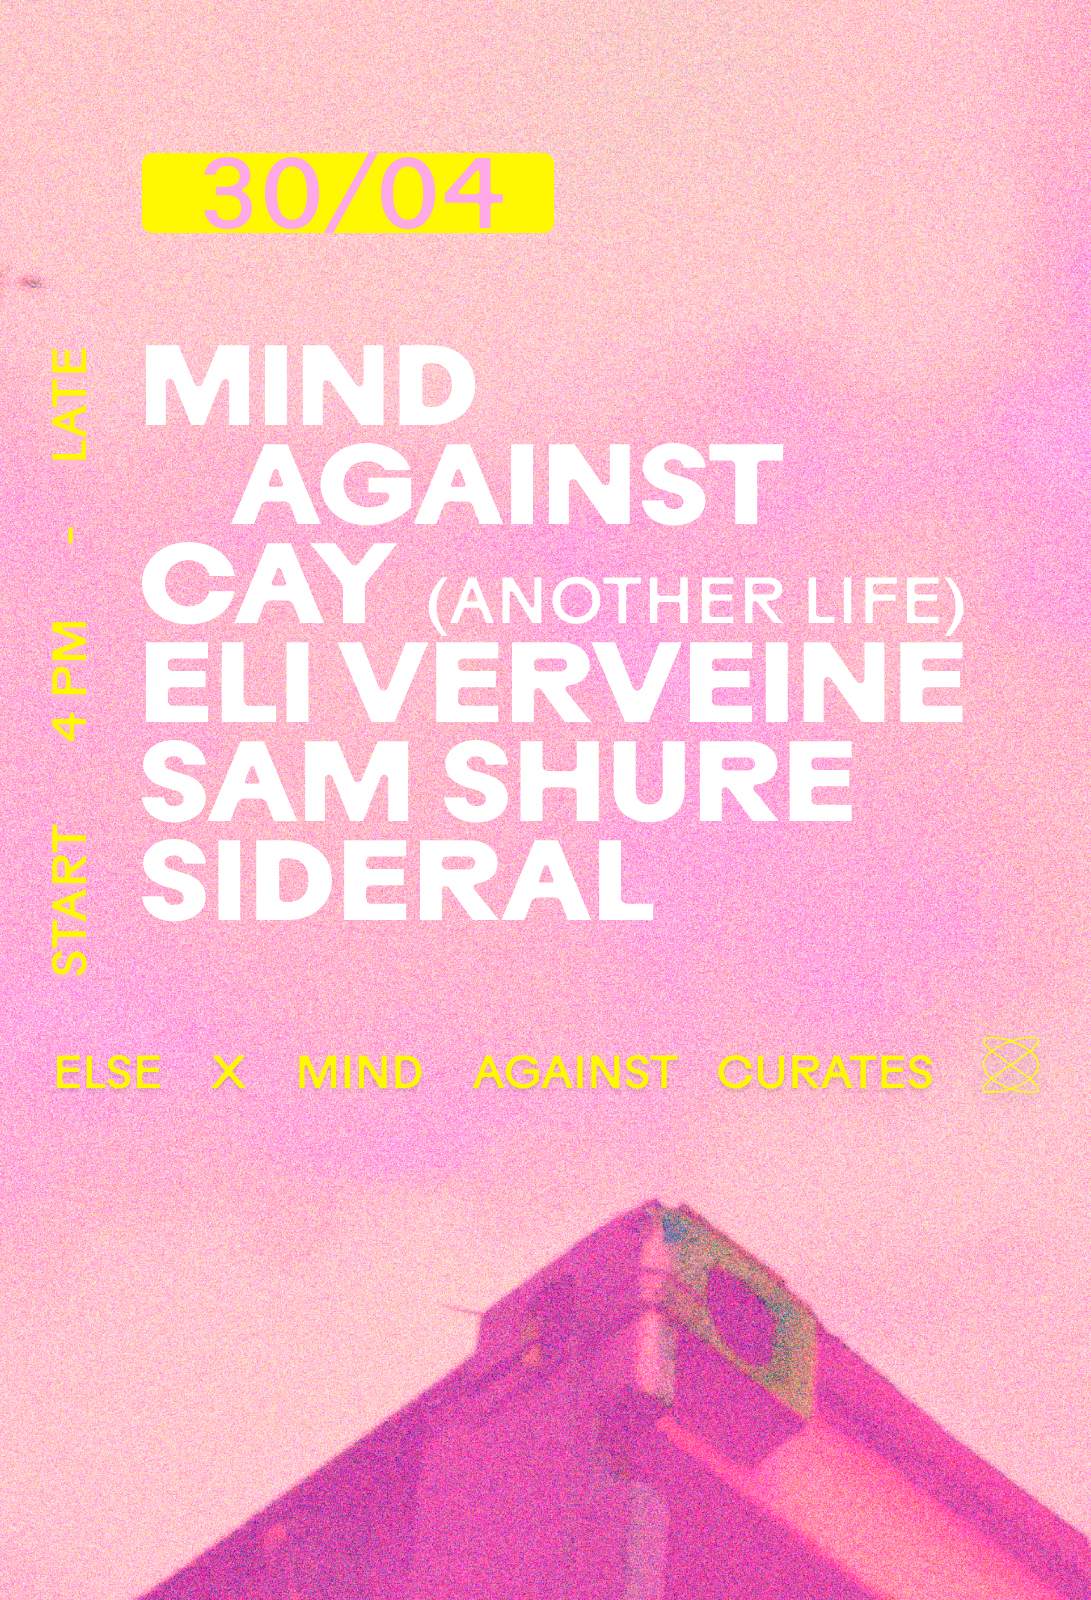 Else X Mind Against Curates: Sam Shure, Eli Verveine, SIDERAL, CAY - Página frontal